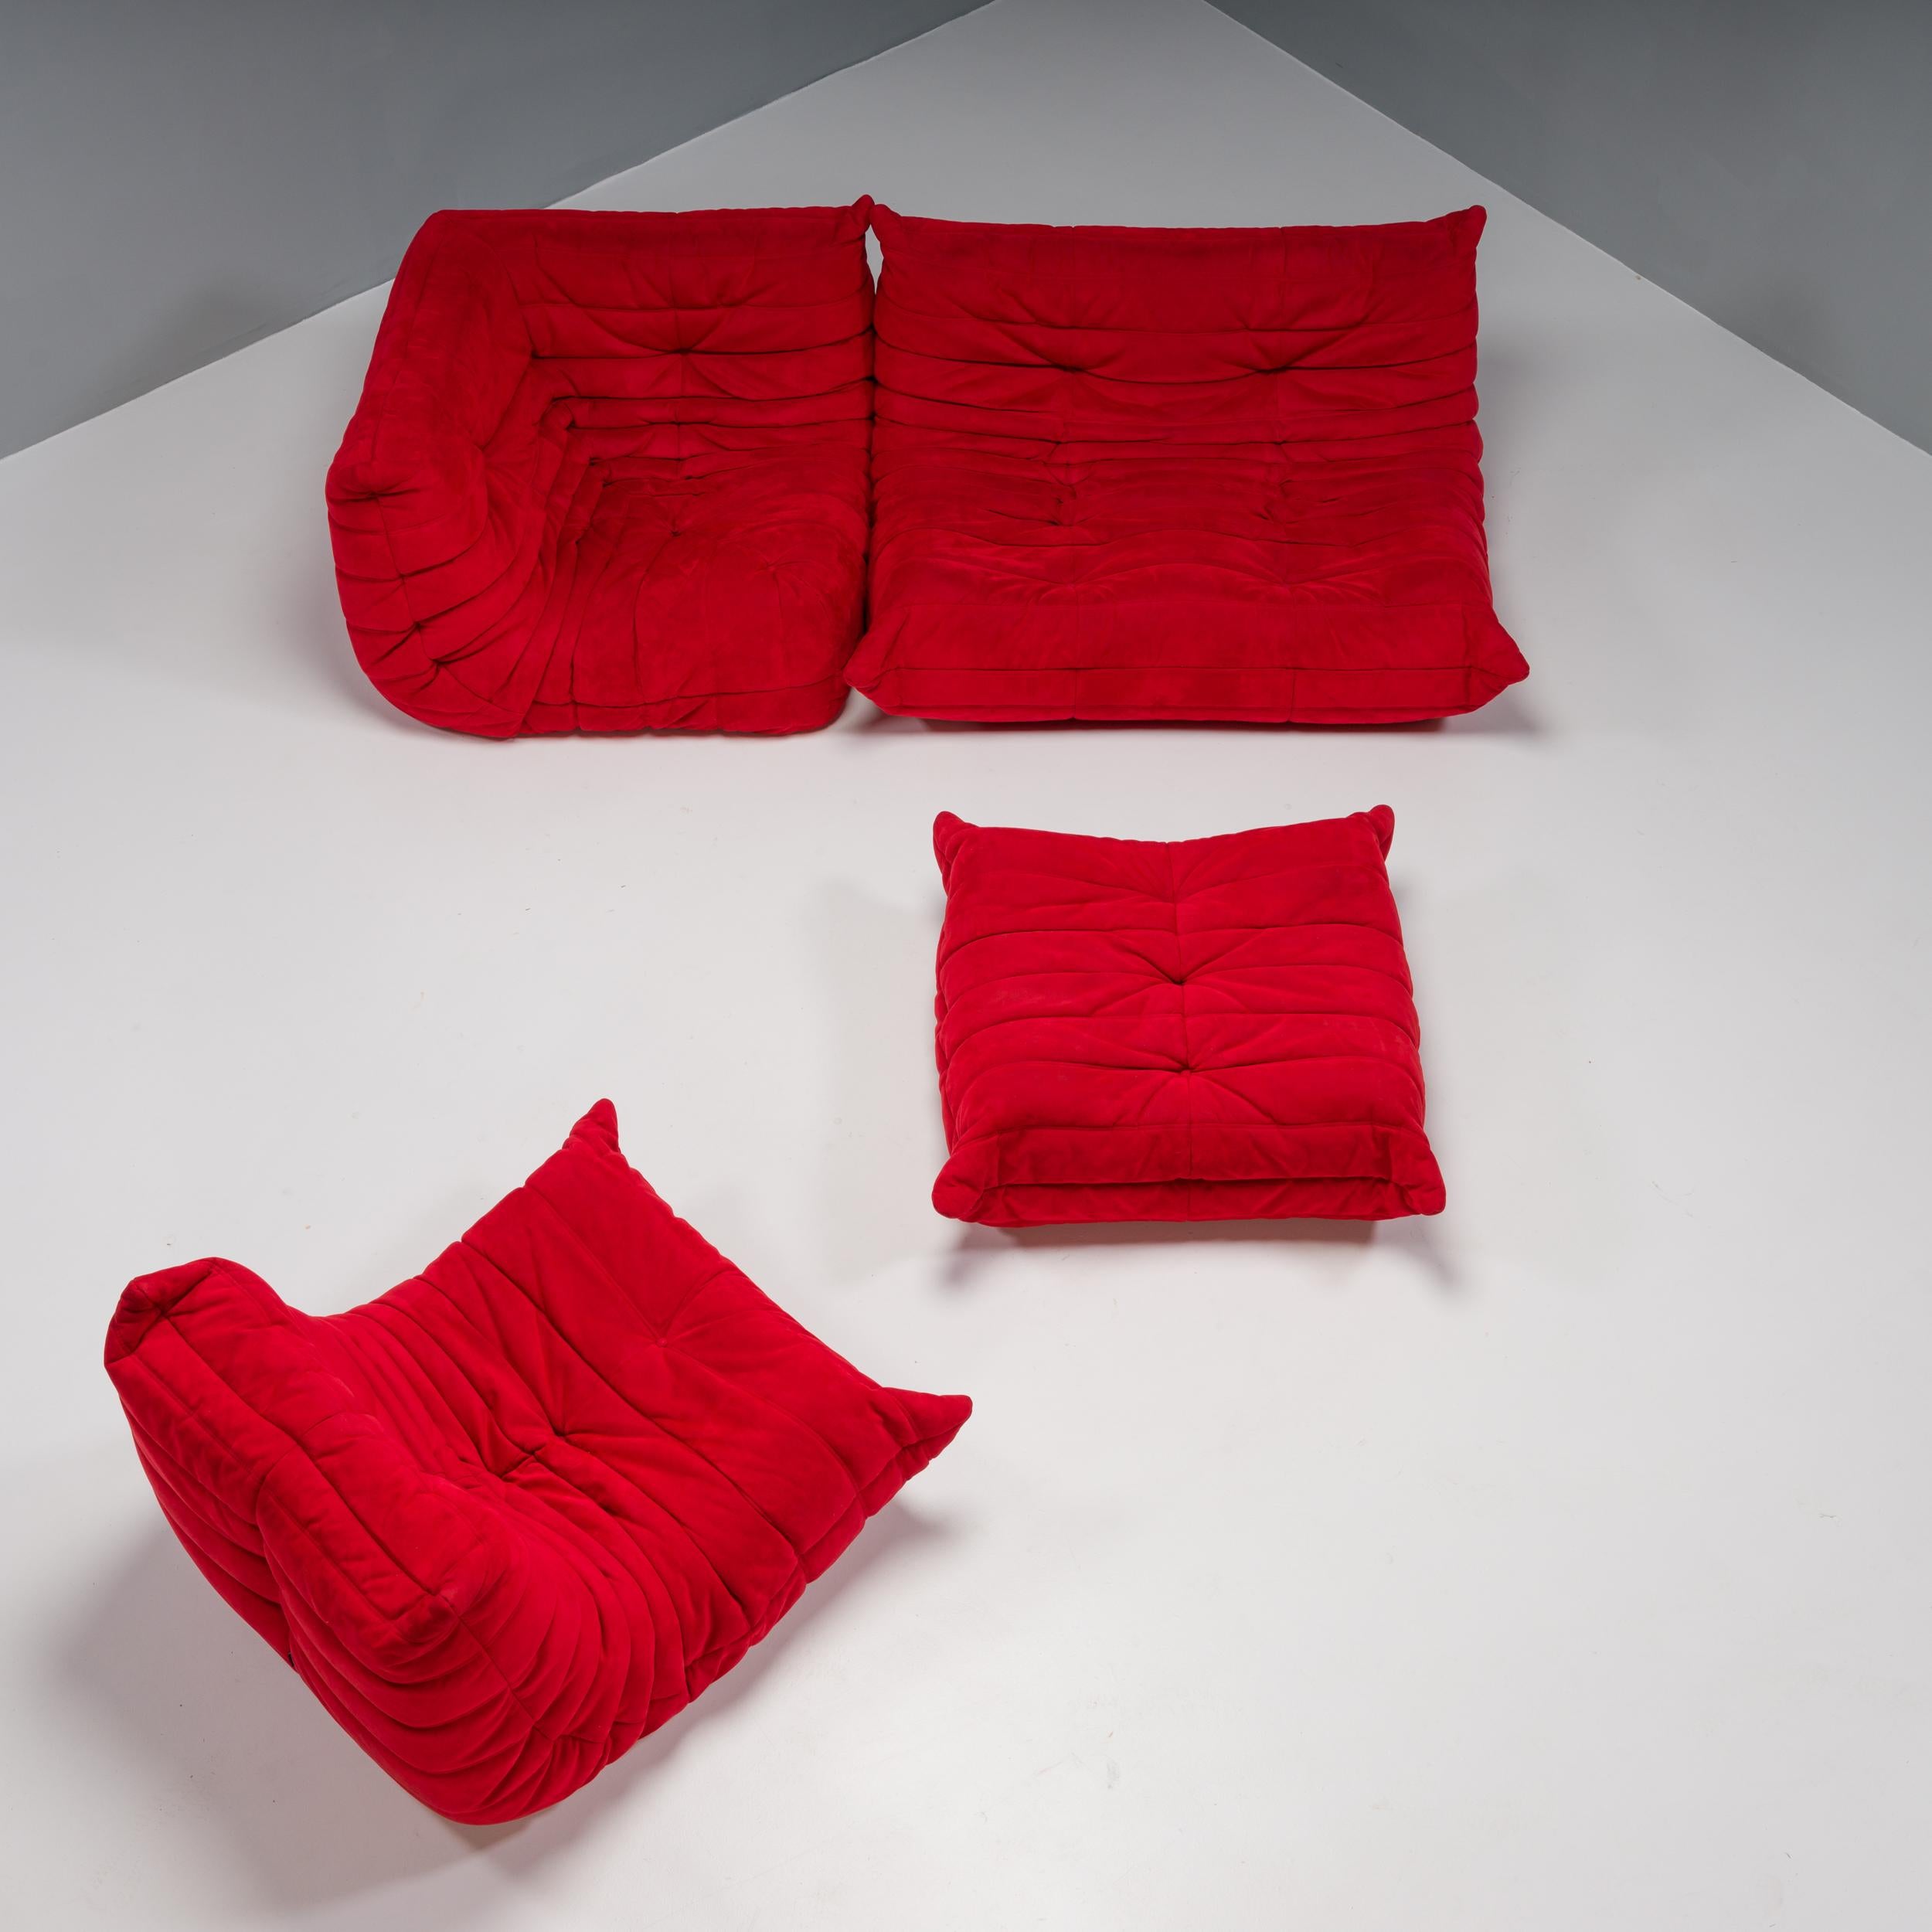 Ligne Roset by Michel Ducaroy Togo Red Modular Sofa, Set of 4 3